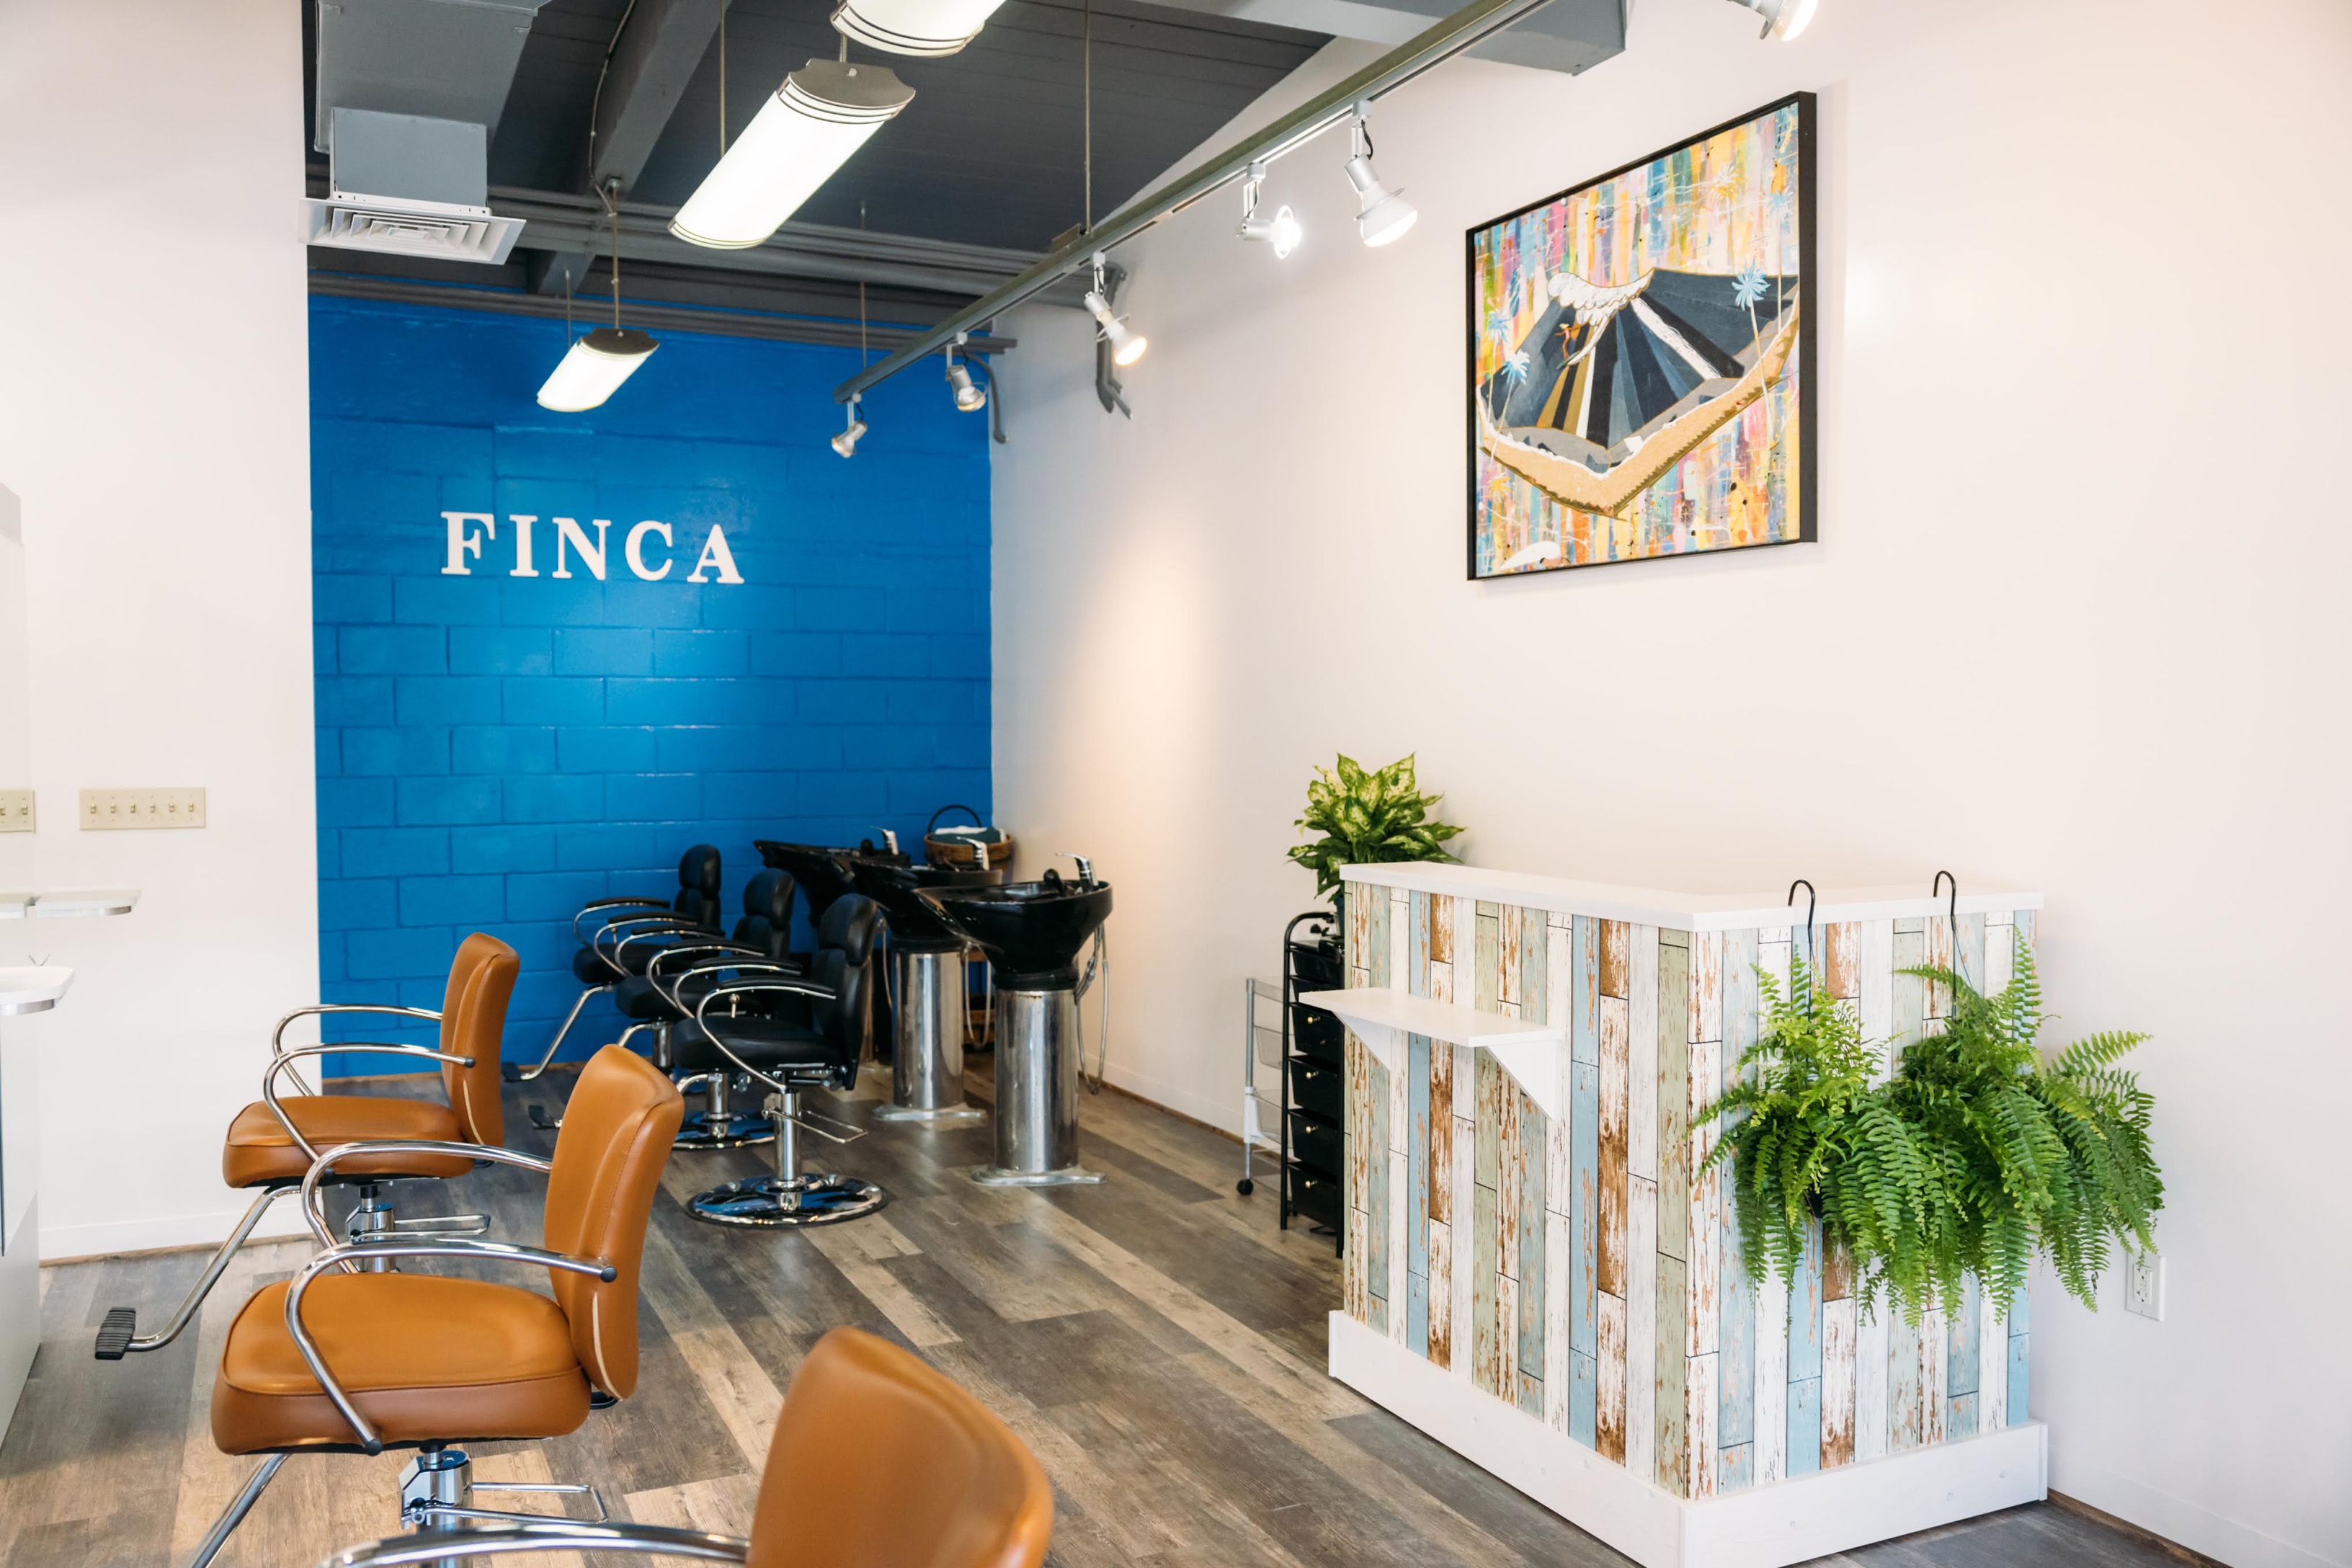 About FINCA Beauty Salon